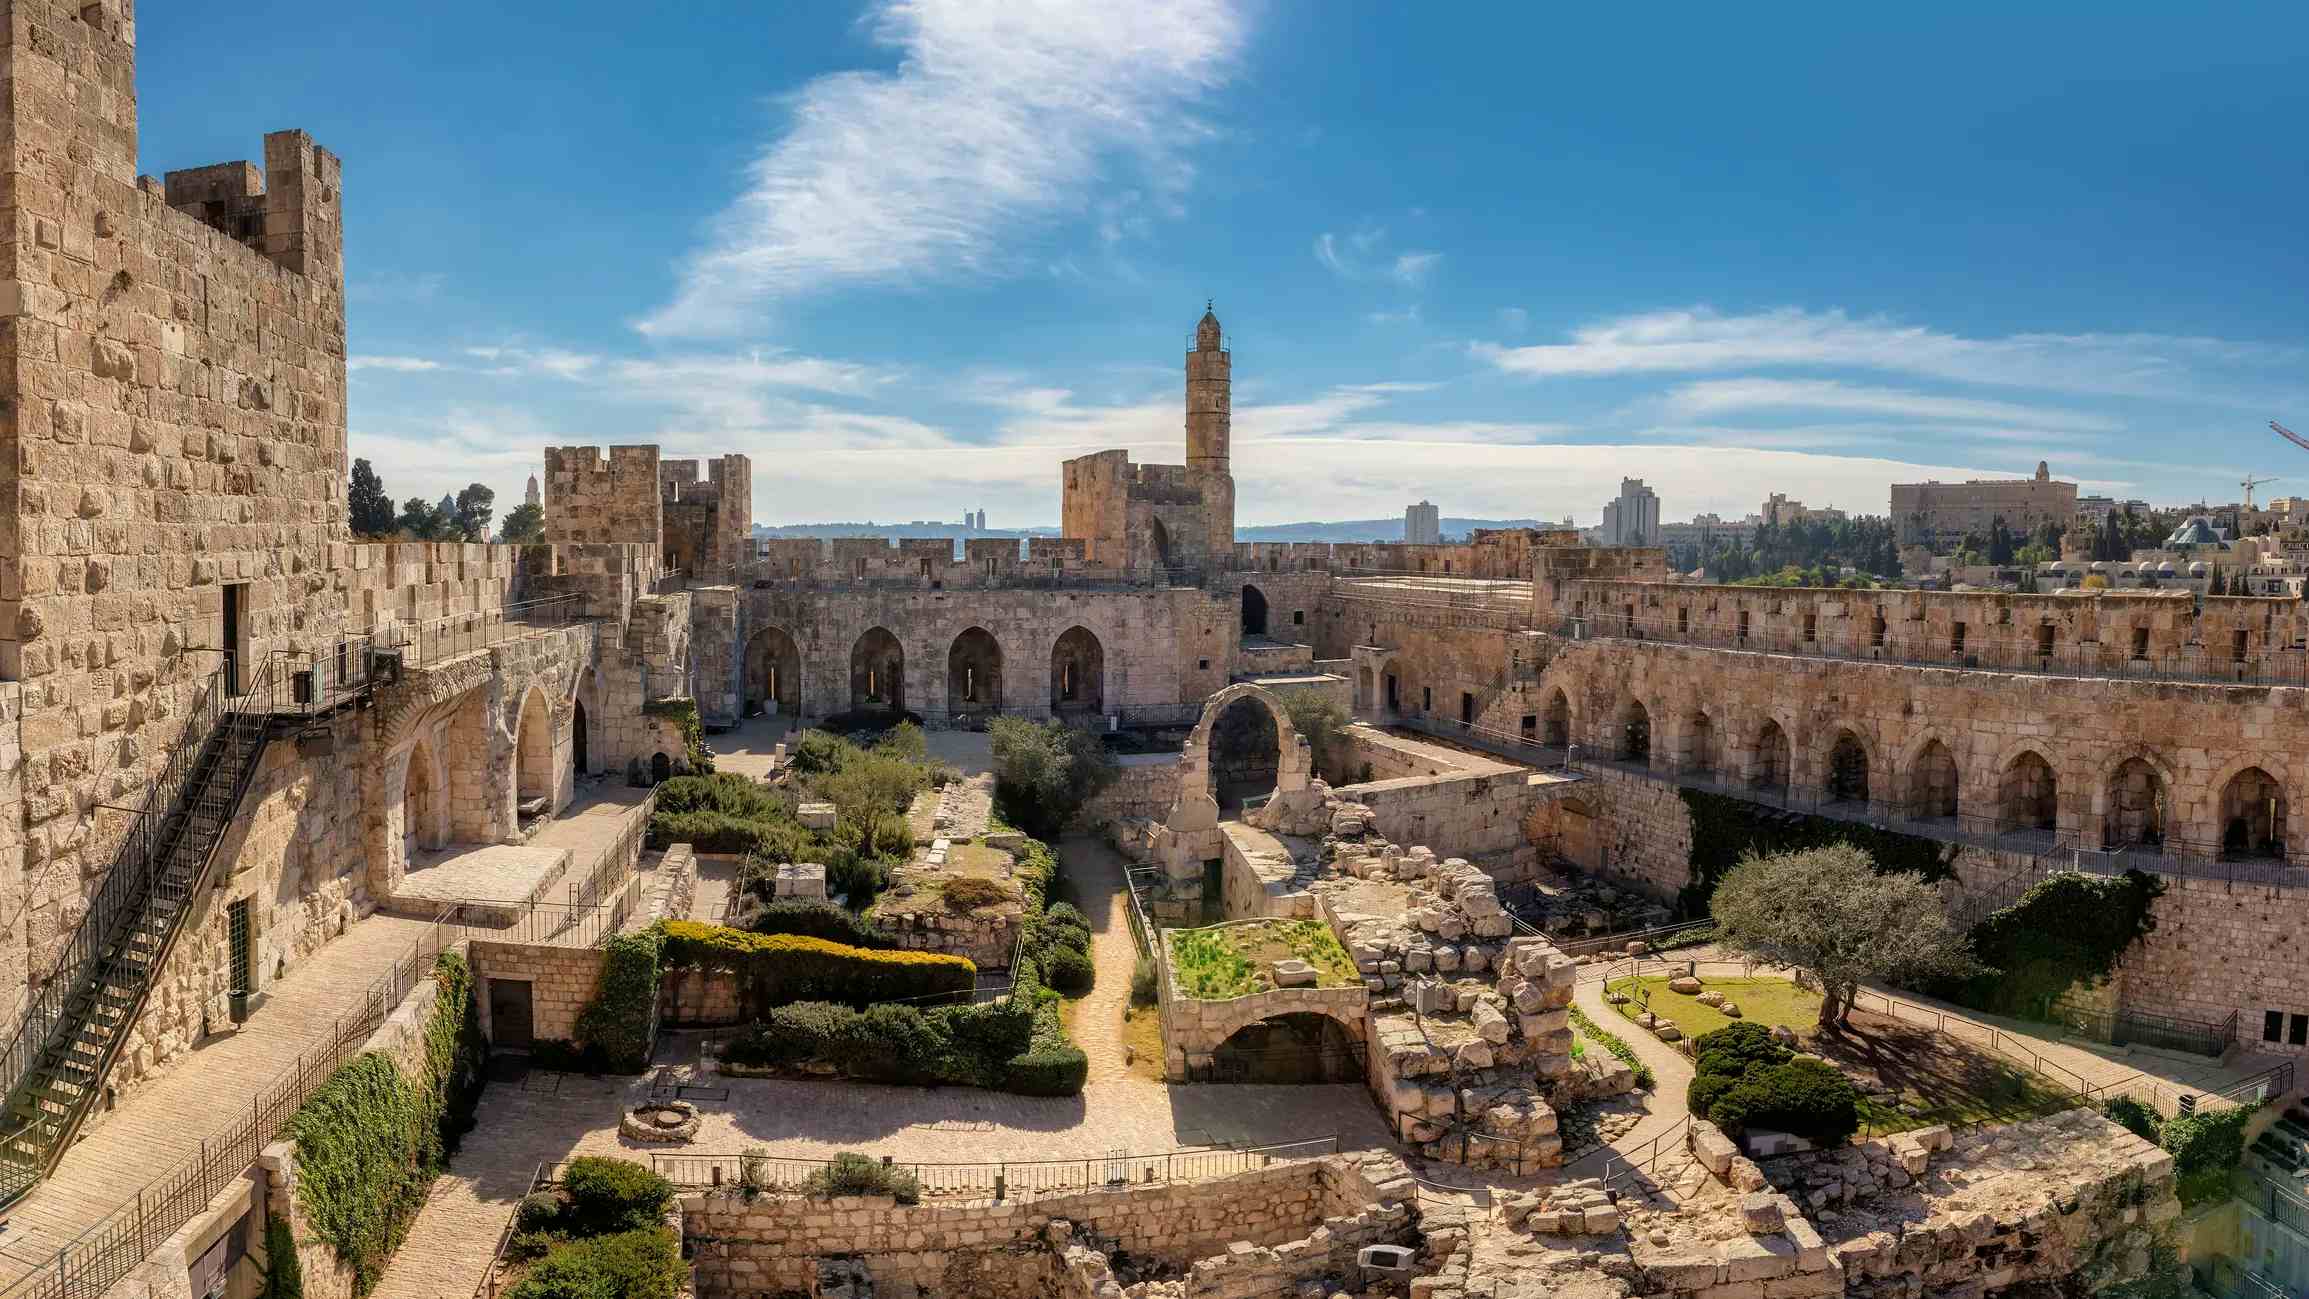 Tower of David image